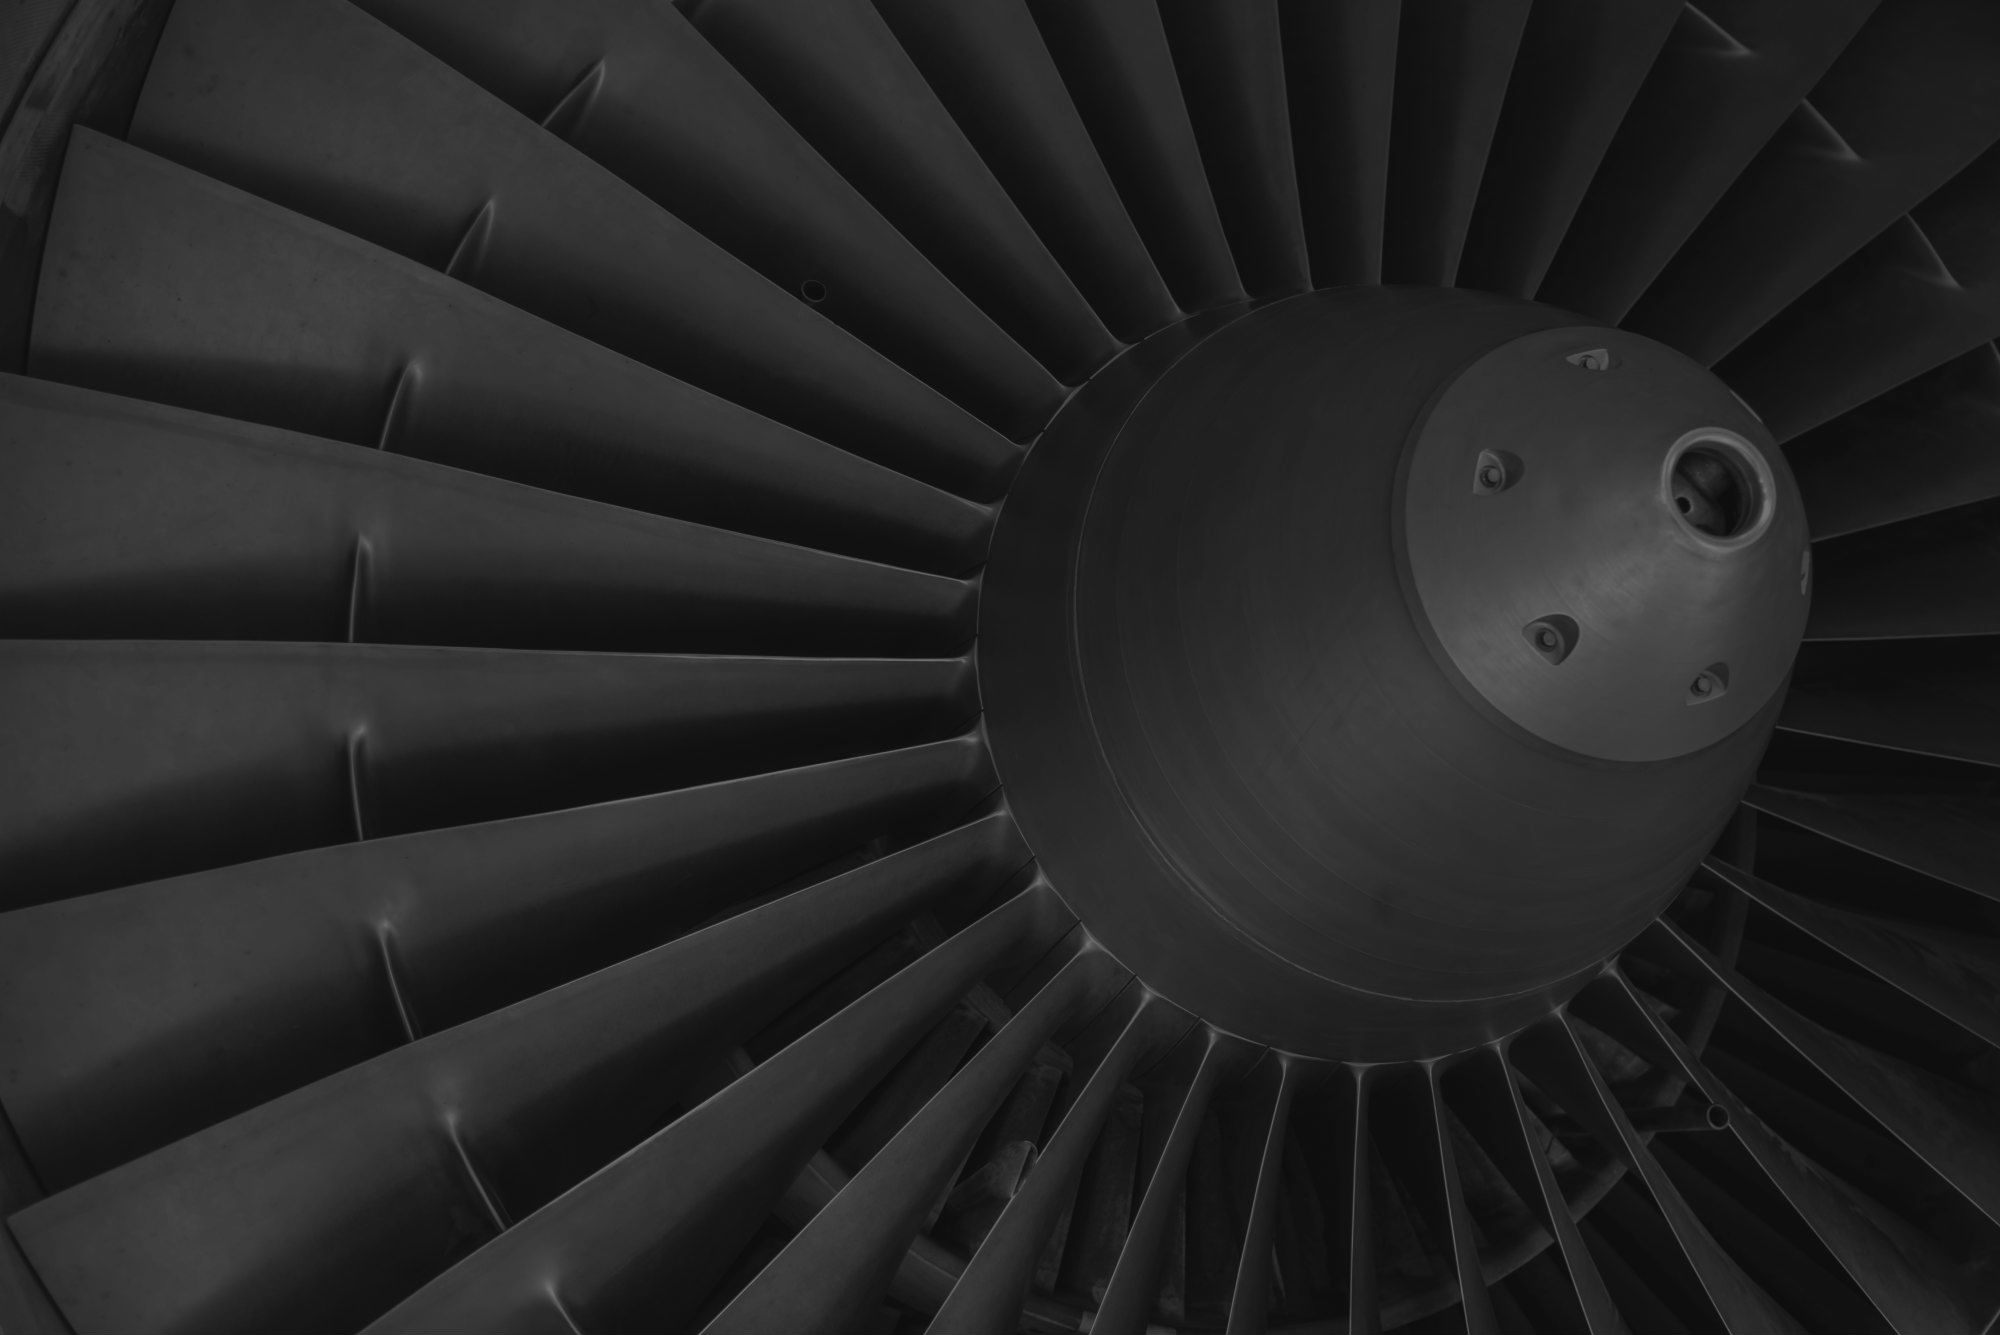 Top background, black & white aircraft turbine